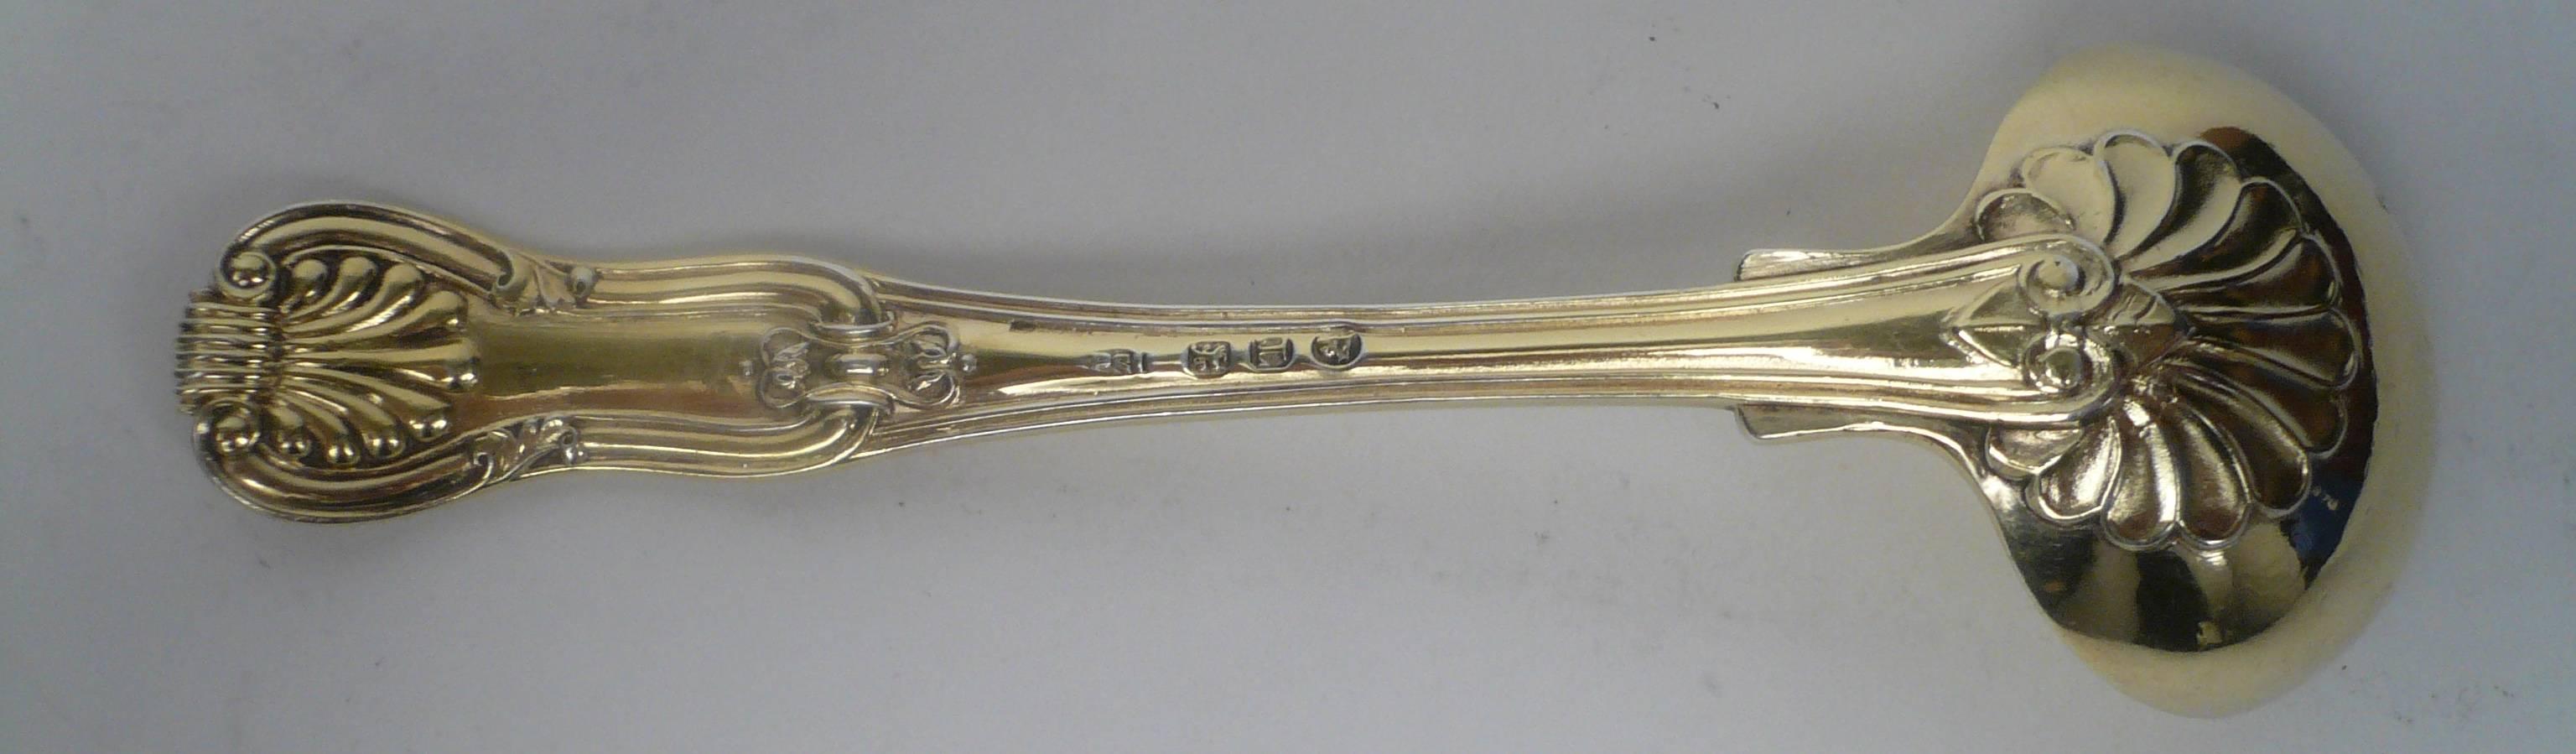 English Regency silver gilt ladle in the King pattern by Paul Storr